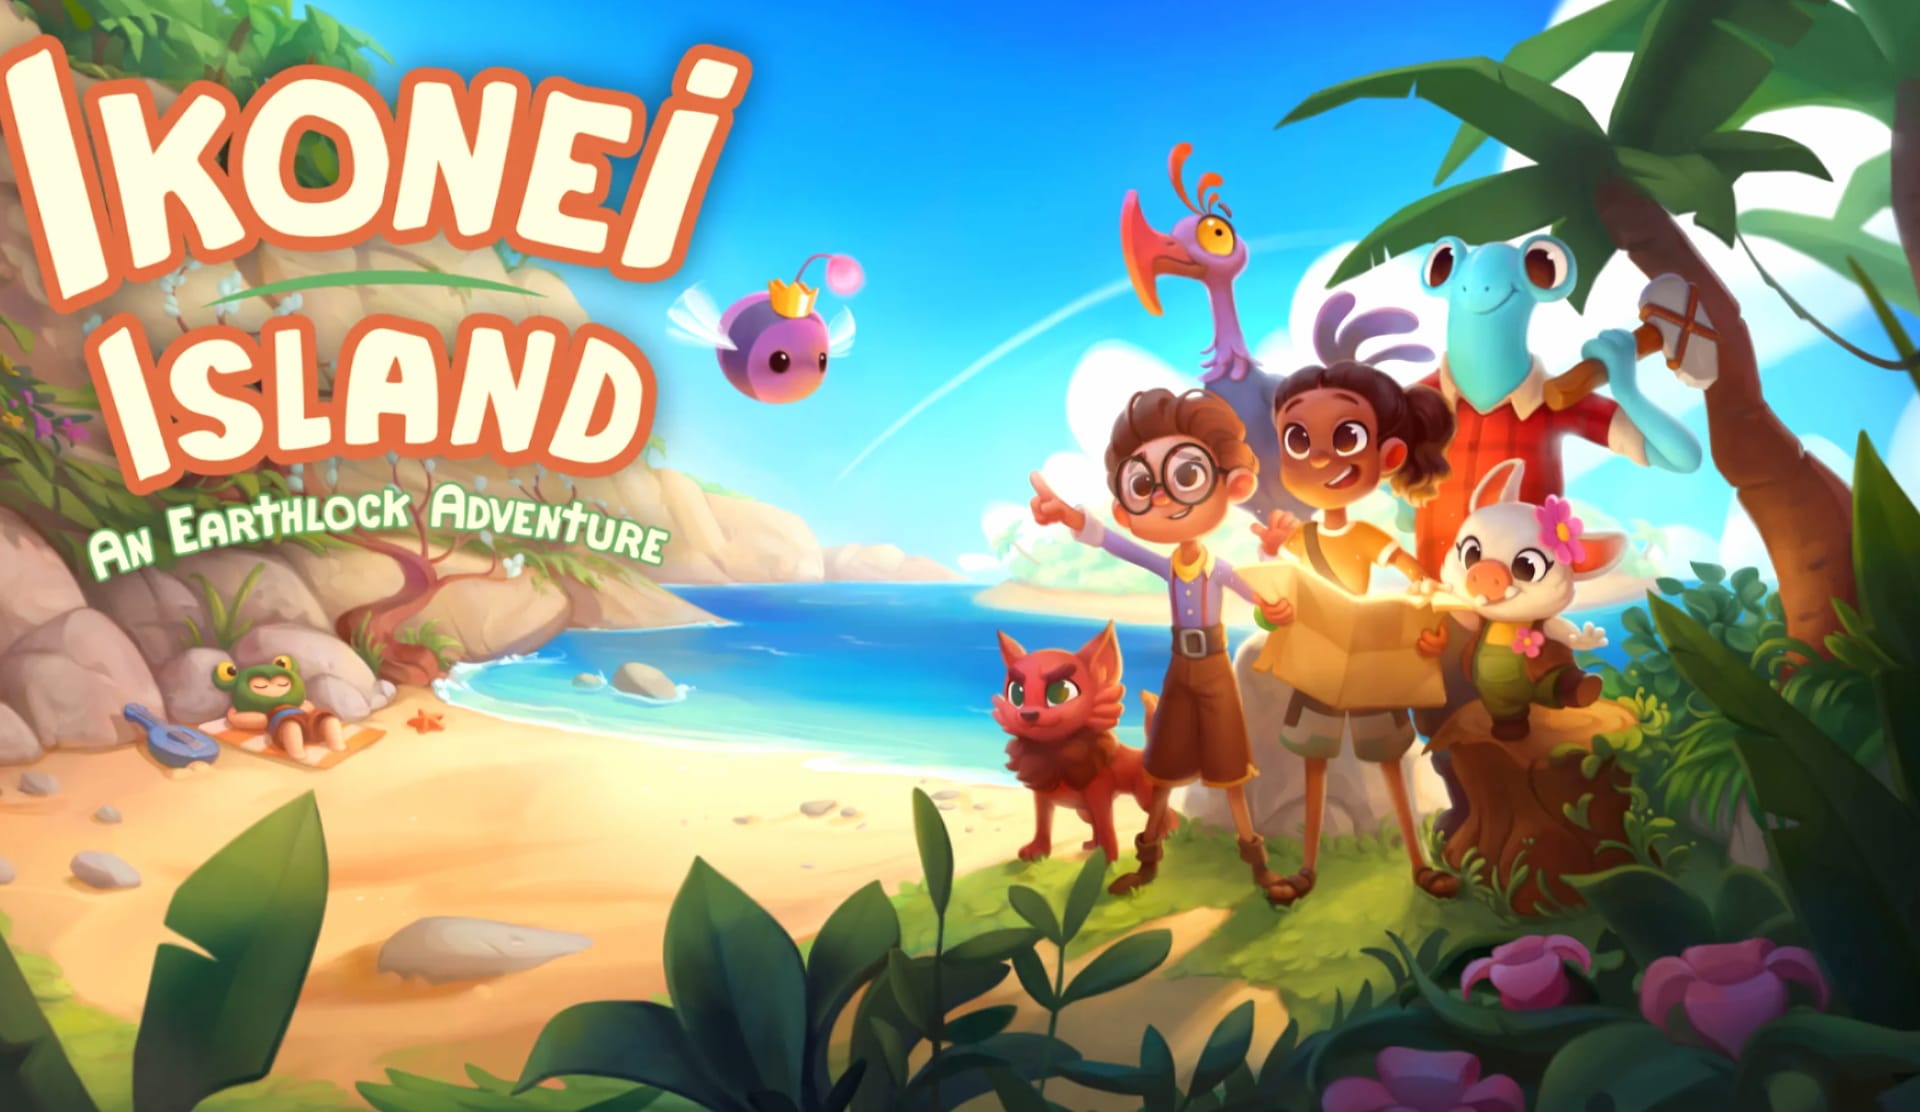 Ikonei Island An Earthlock Adventure at 1024 x 1024 iPad size wallpapers HD quality